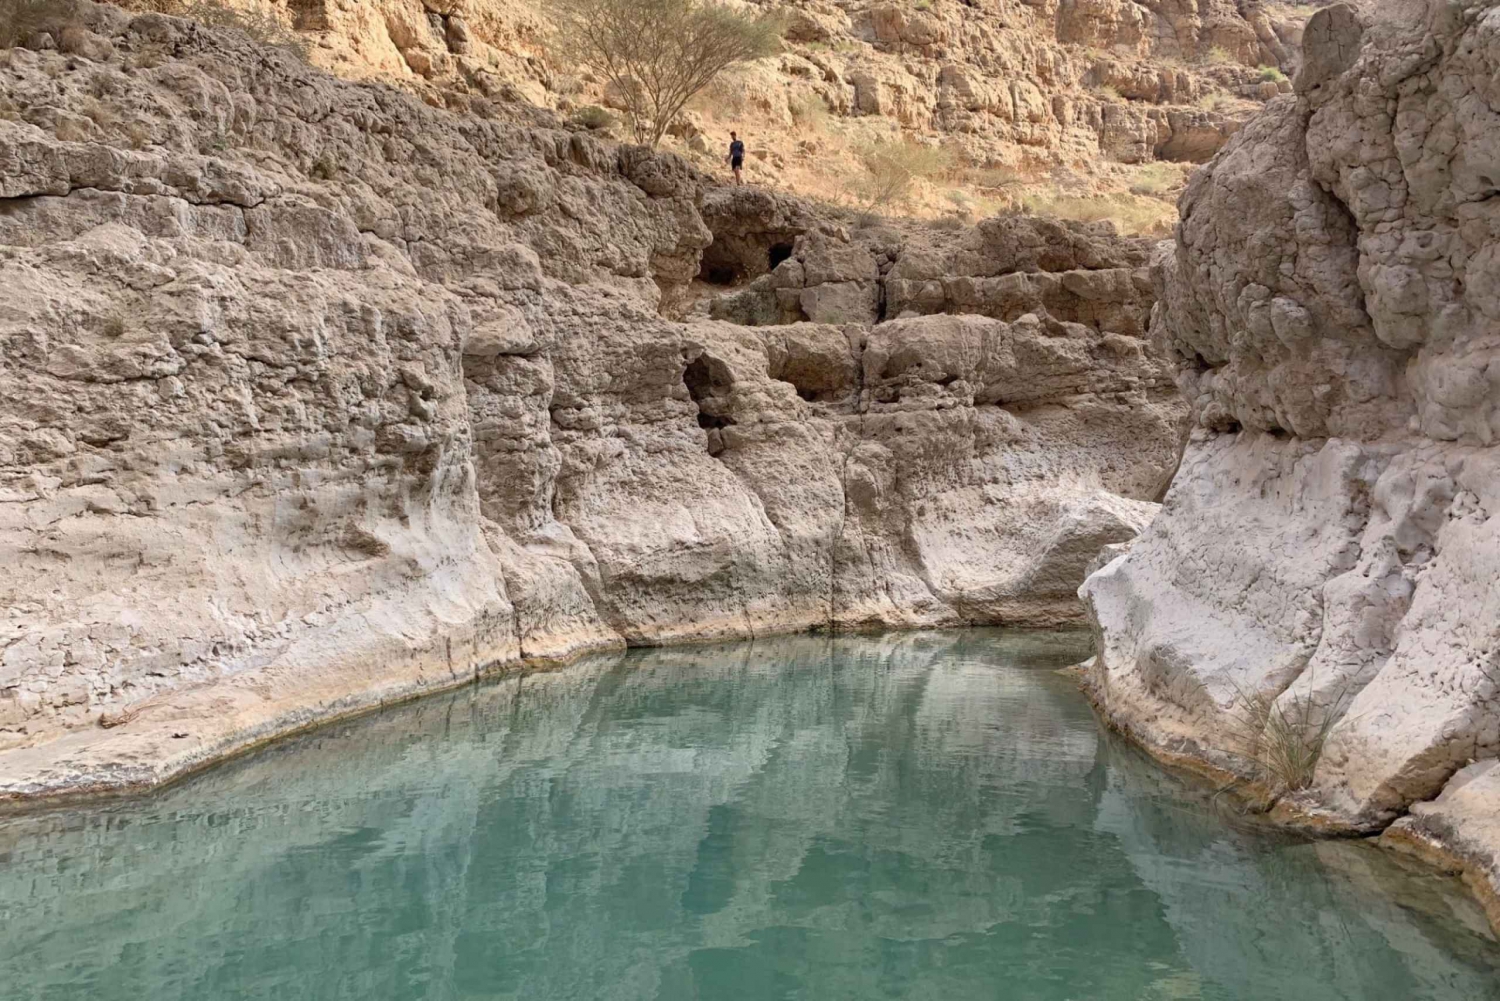 Private trip to Wadi Shab + sinkhole